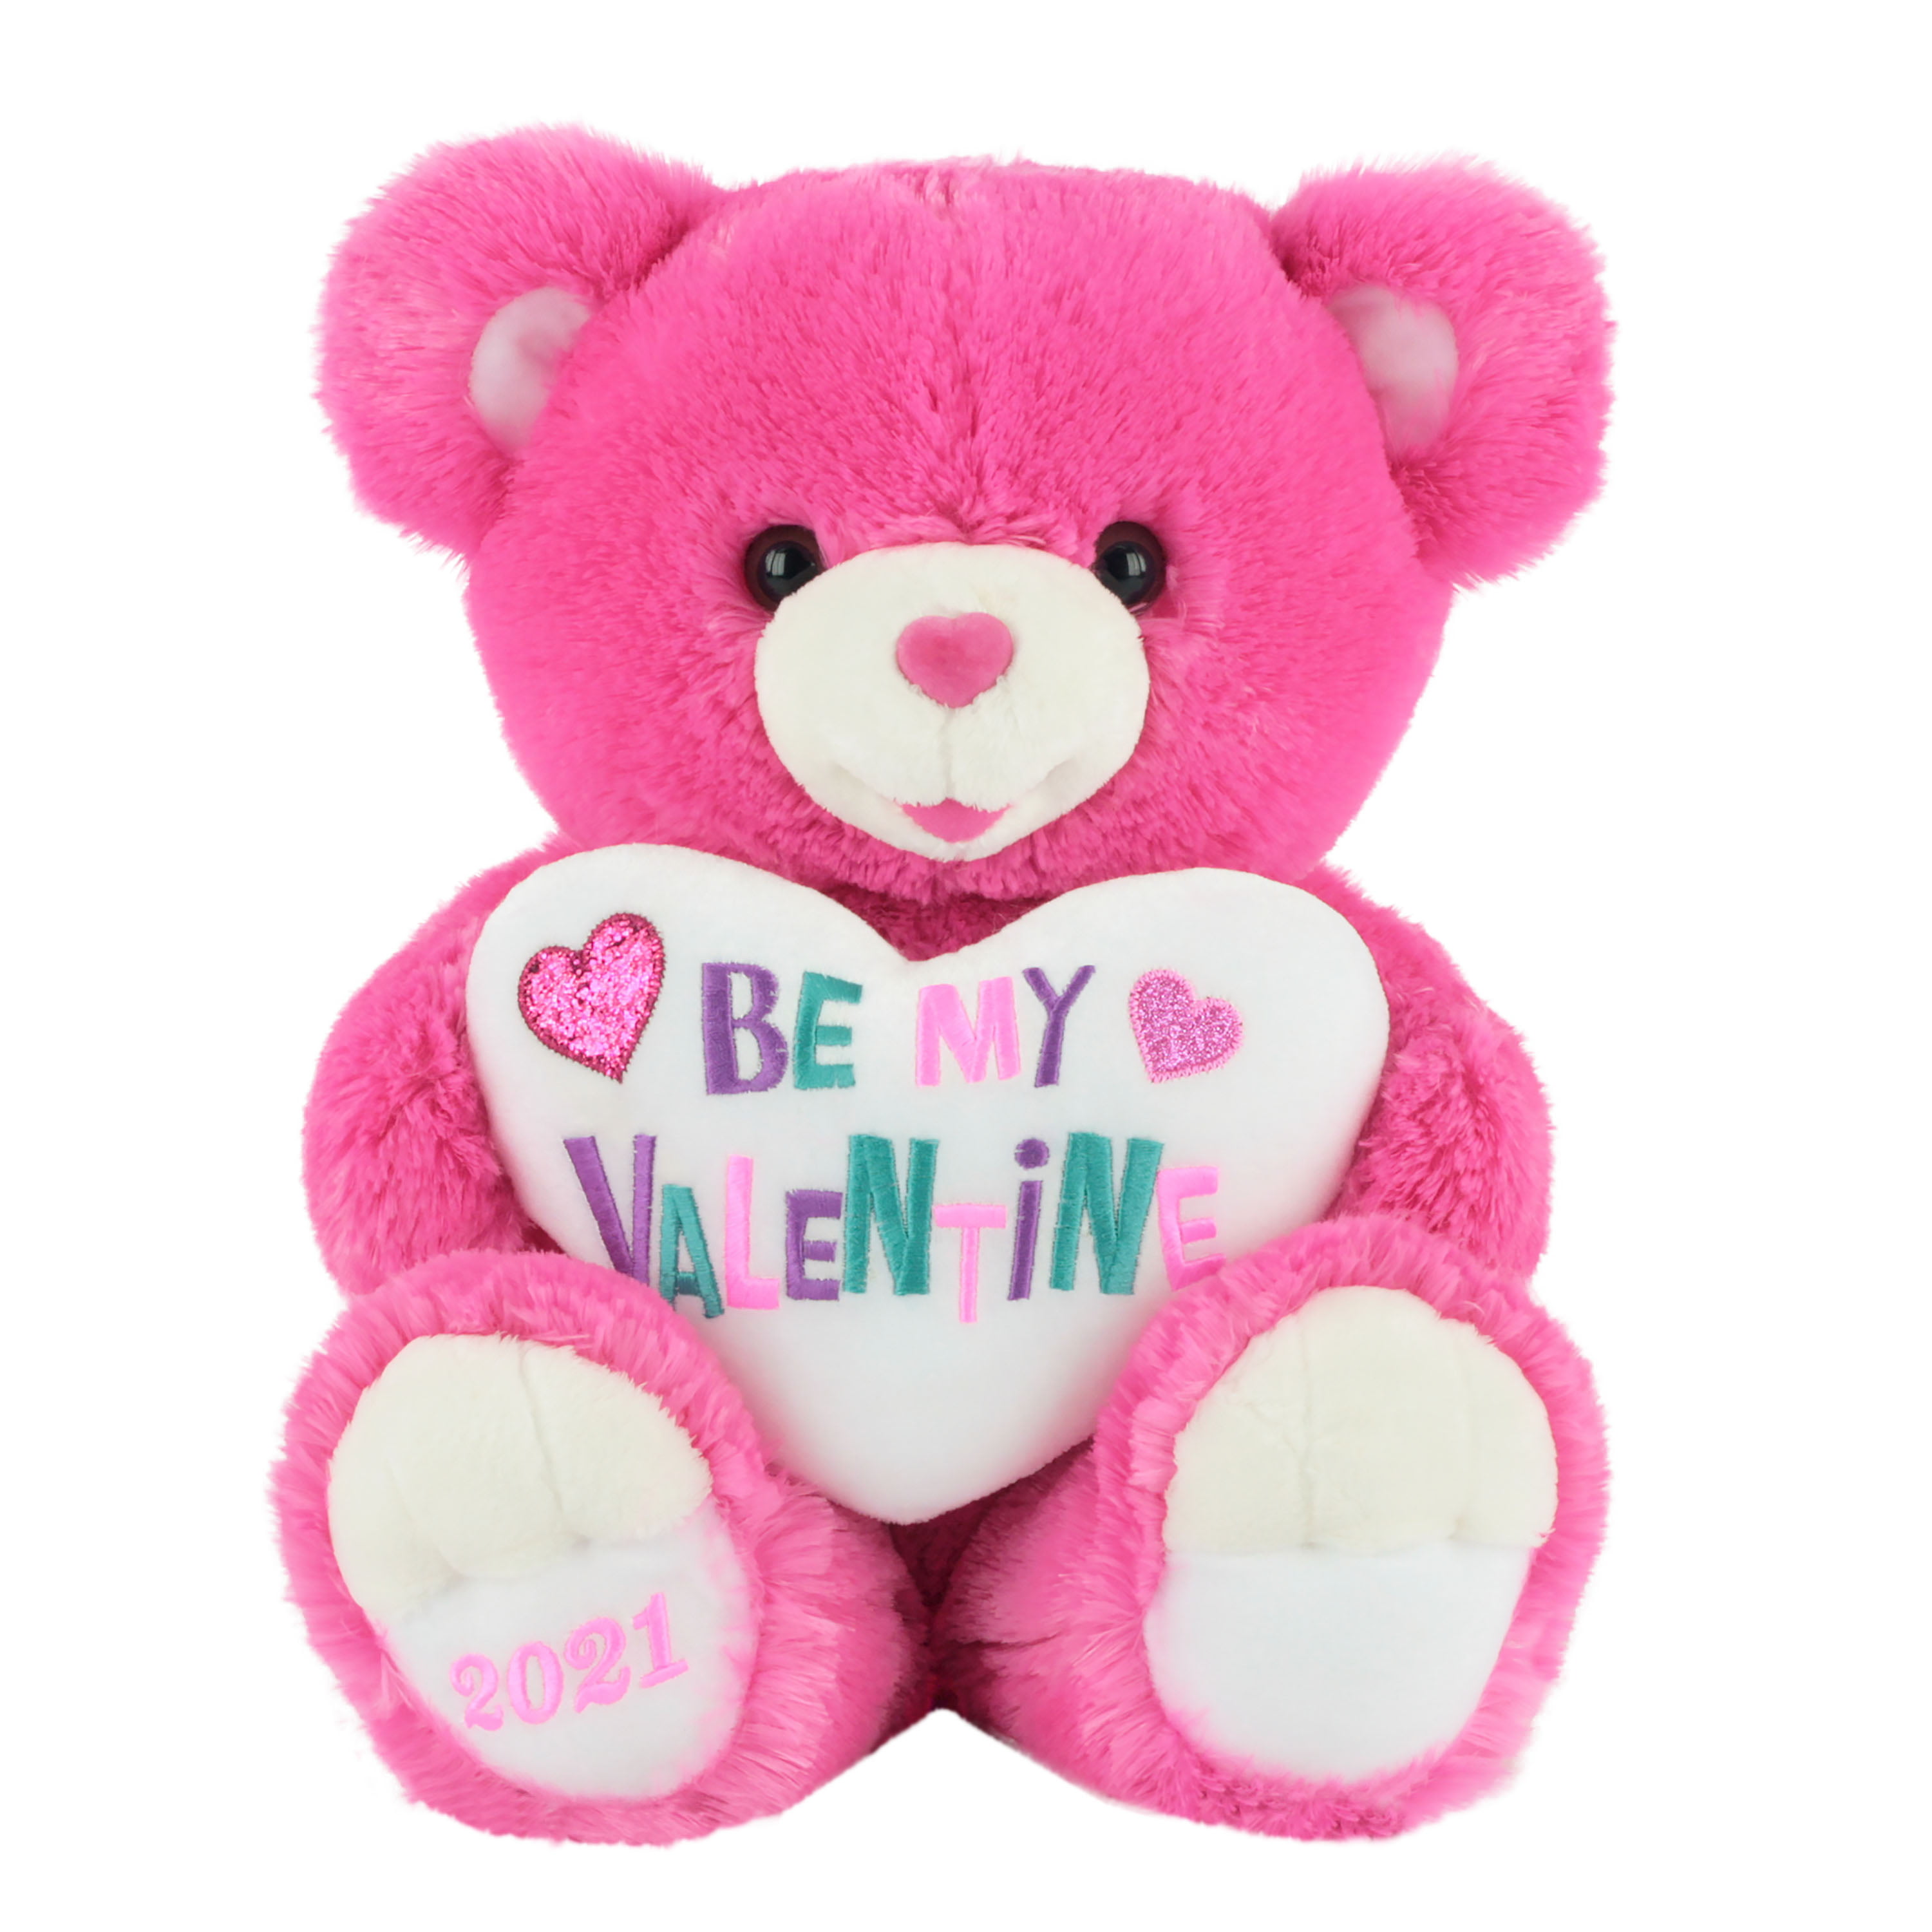 Way To Celebrate Valentine’s Day Large Sweetheart Teddy Bear 2021, Dark